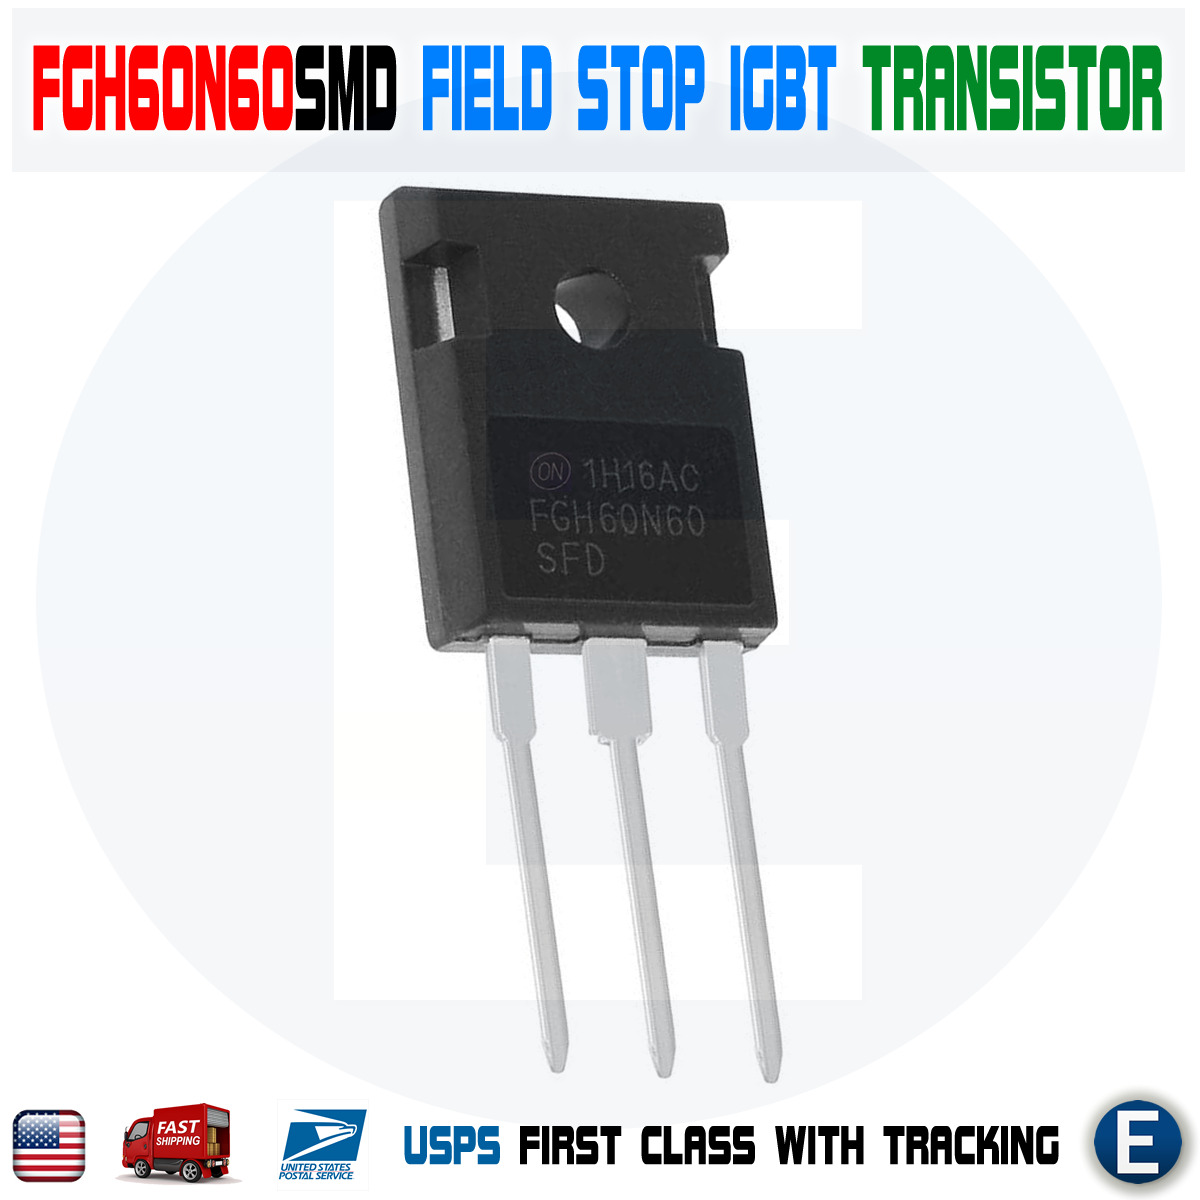 FGH60N60SMD Field Stop IGBT 60N60 60A 600V FGH60N60 Transistor TO-247